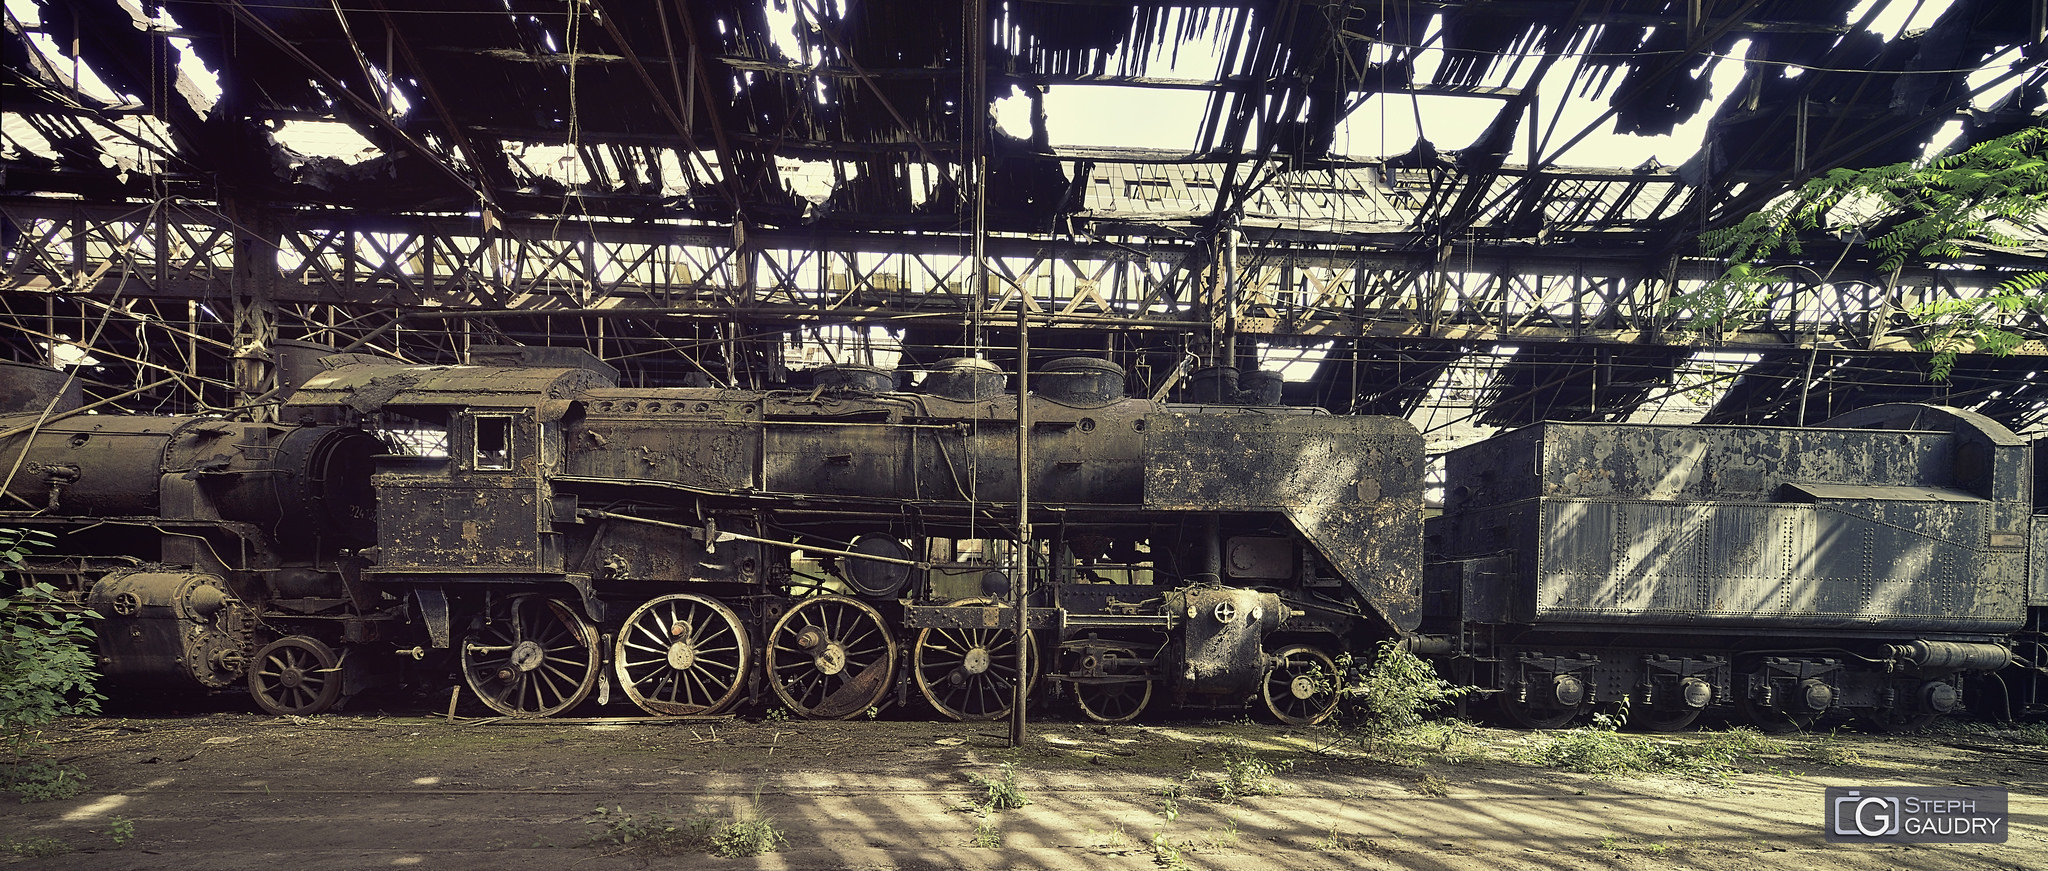 Abandoned steam train [Click to start slideshow]